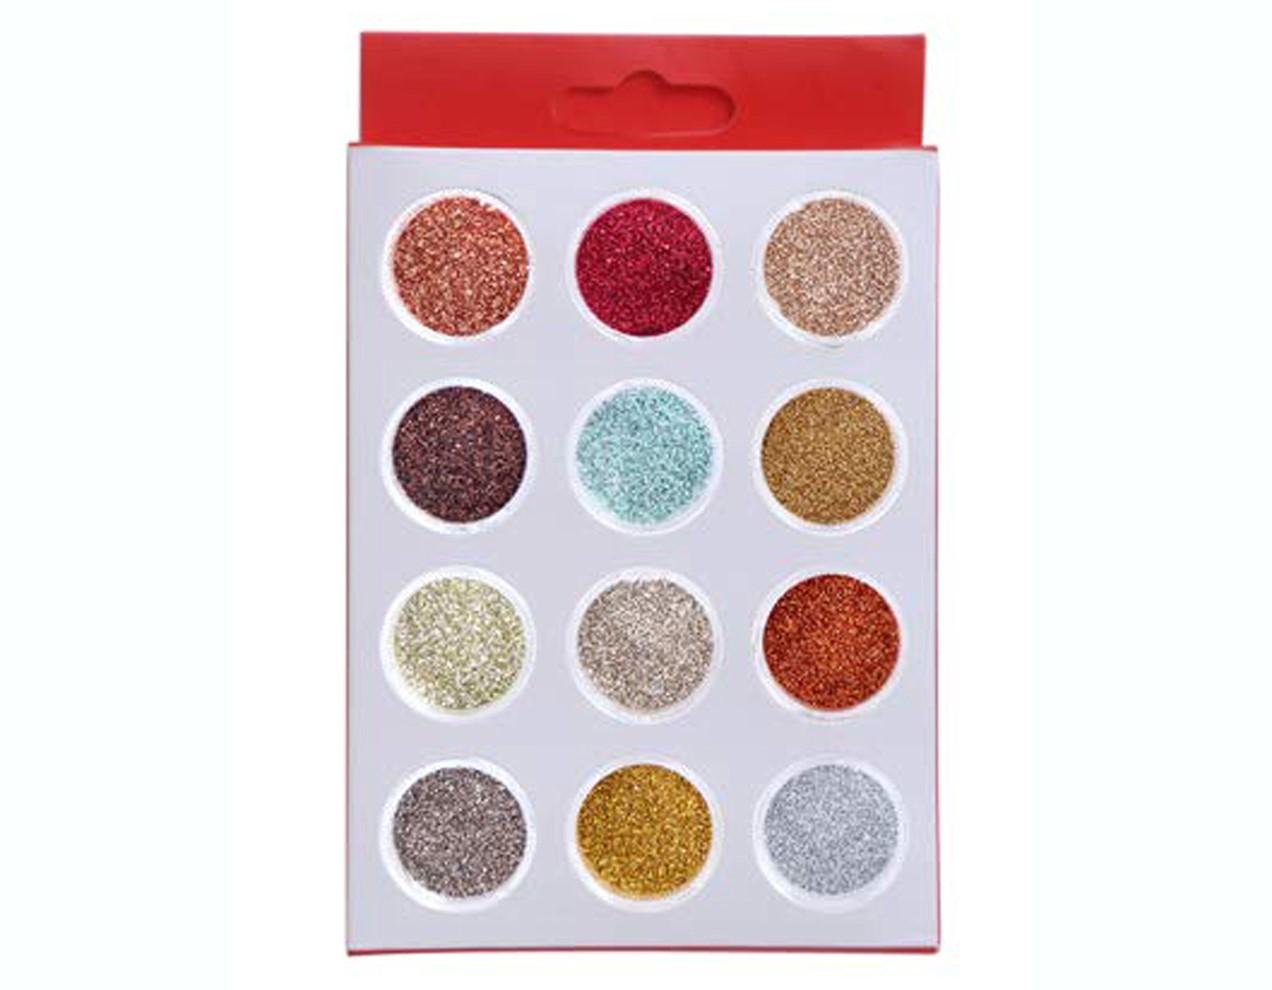 DesiButik's Nail Art Glitter Powder set of 12 Multicolor NC13